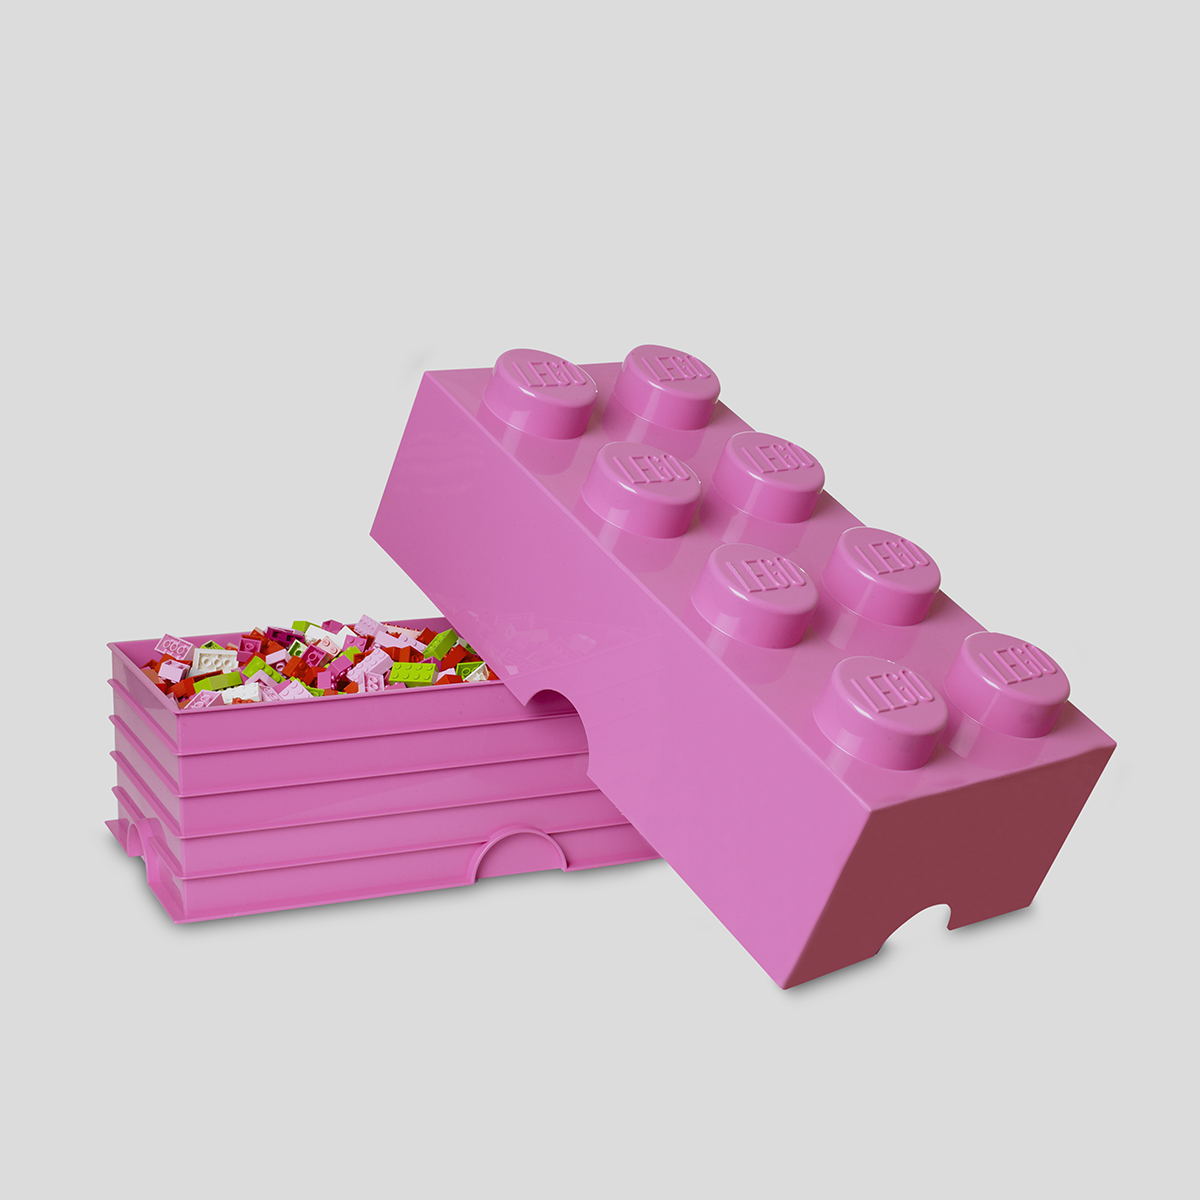 pink and purple lego bricks